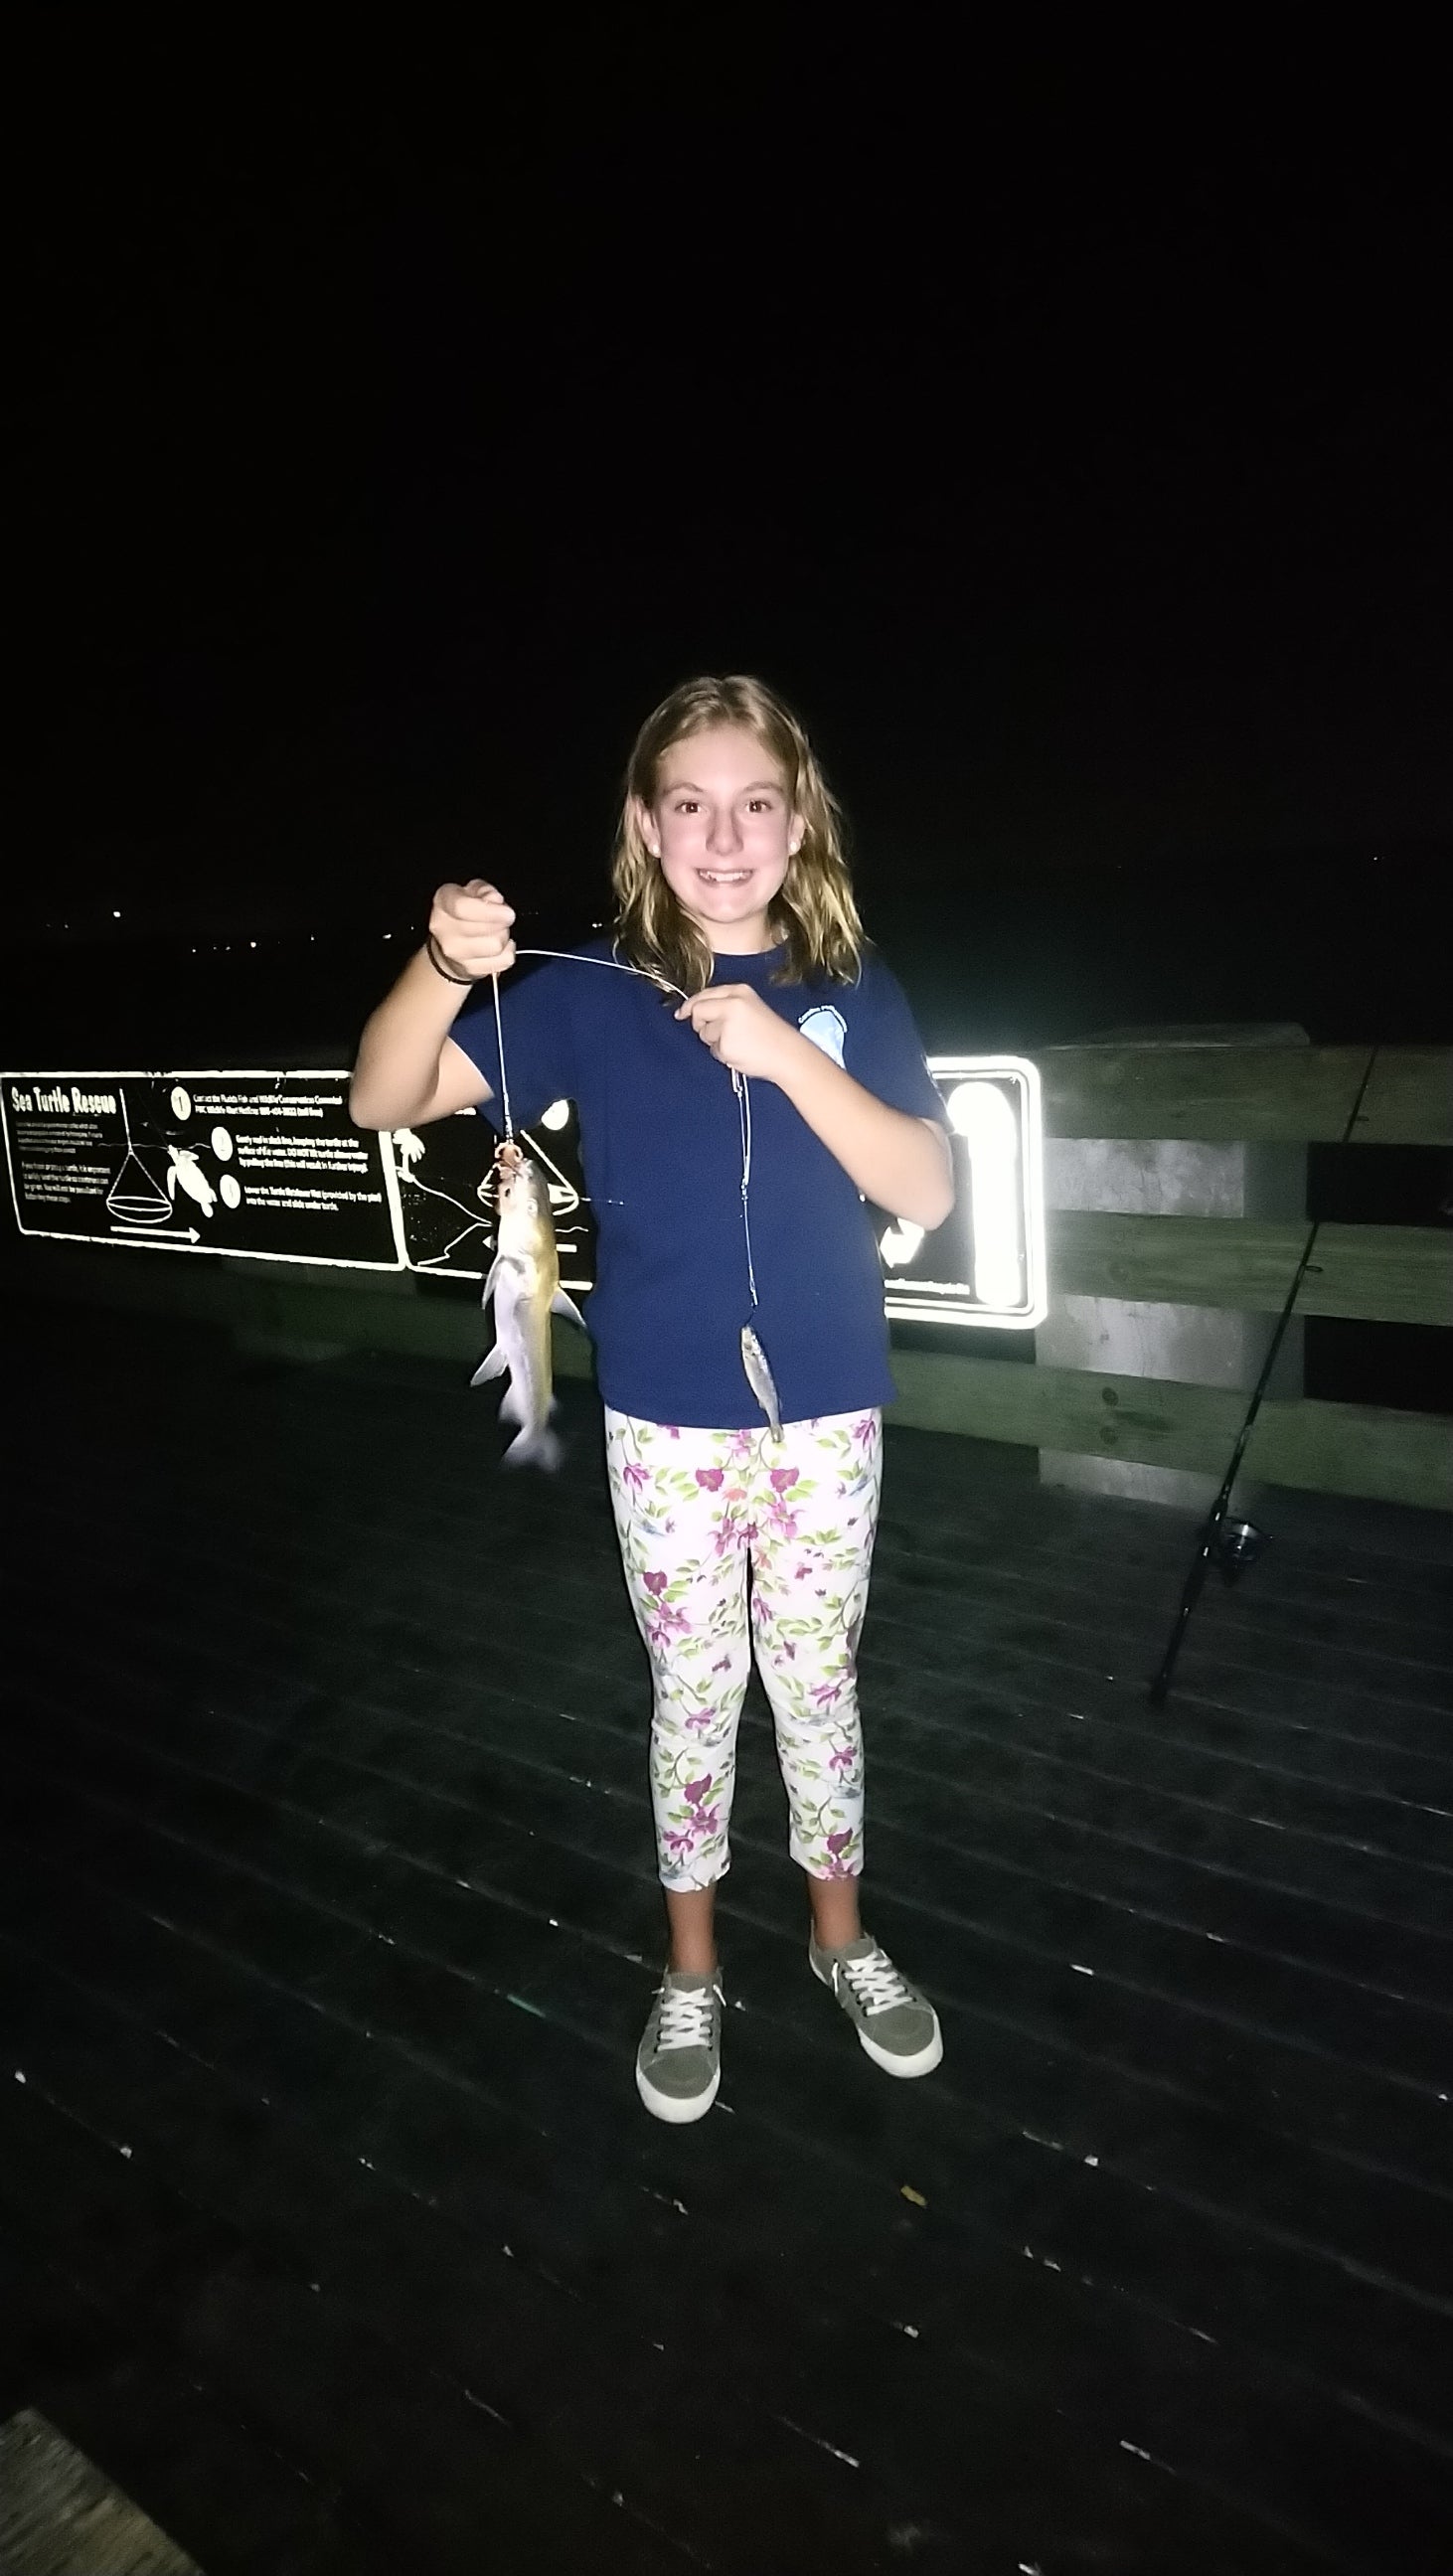 Night fishing on the pier